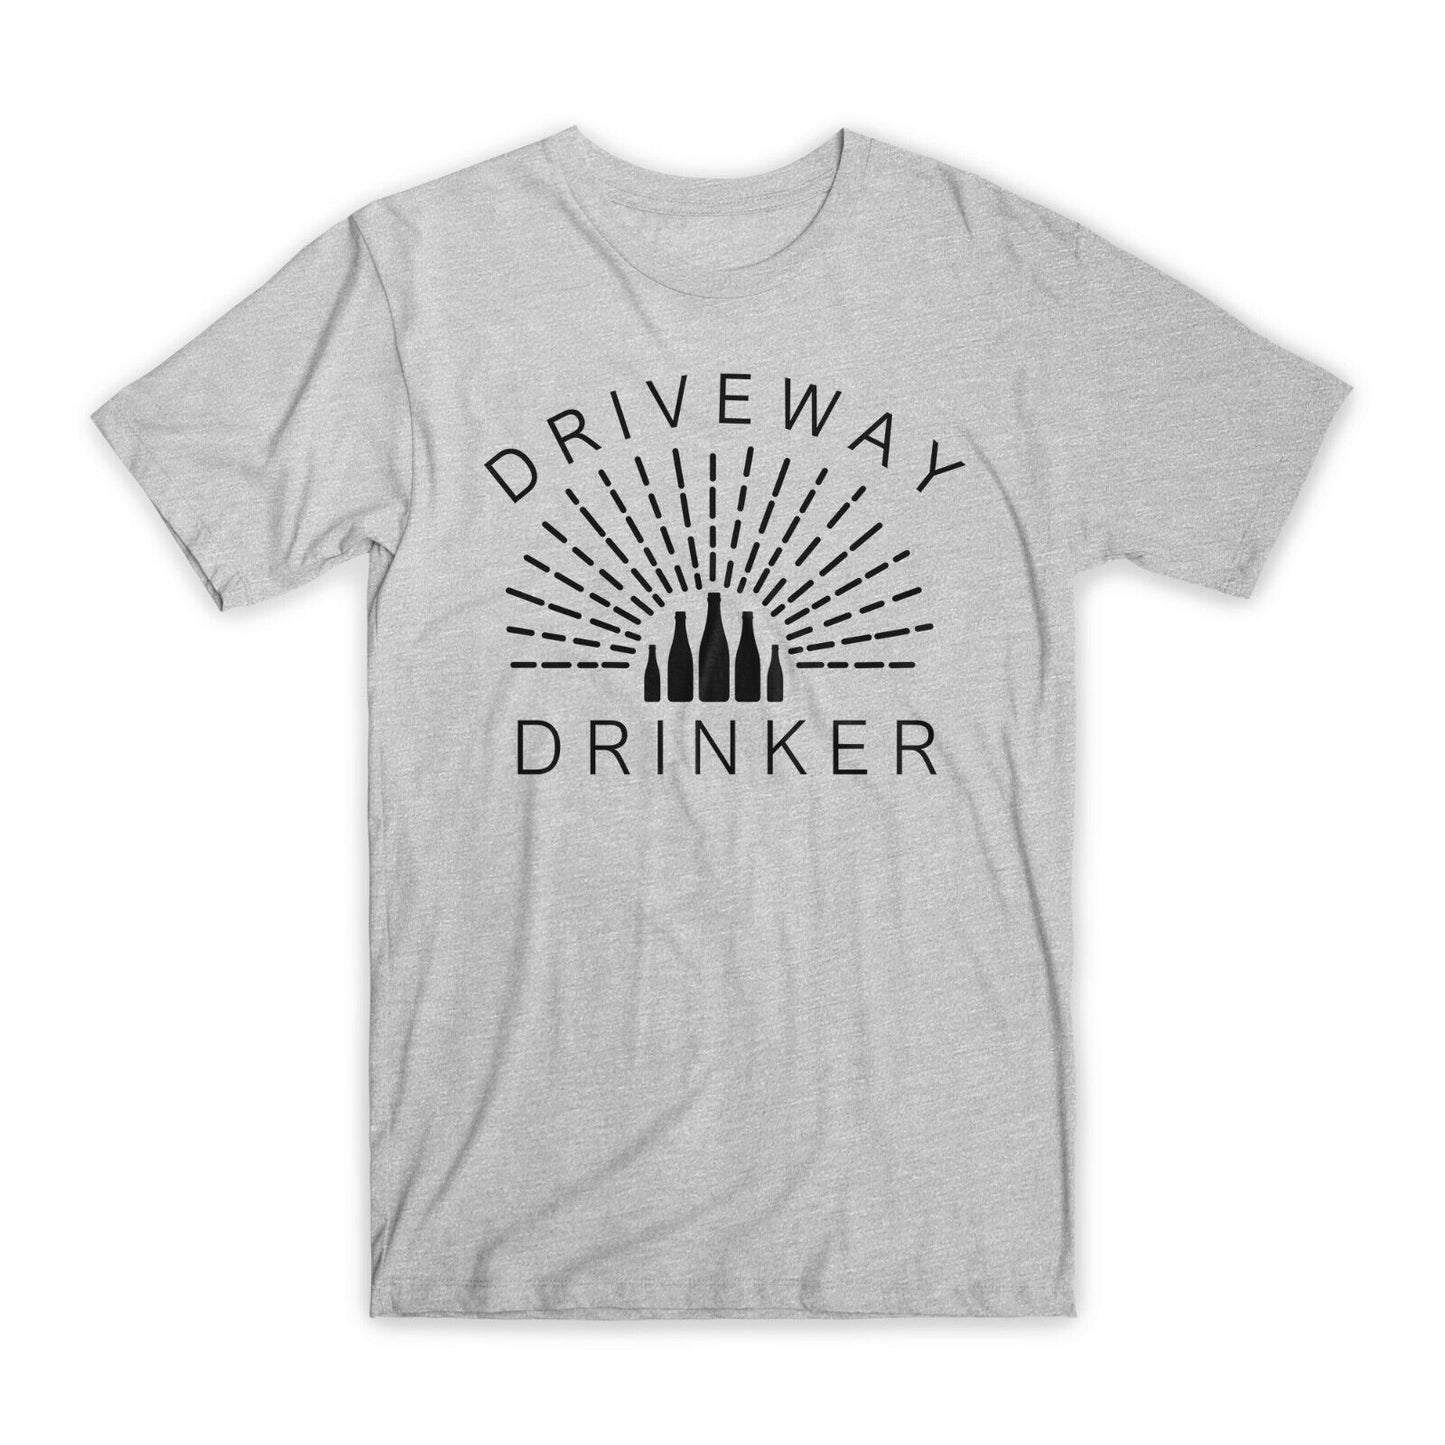 Driveway Drinker Print T-Shirt Premium Soft Cotton Crew Neck Funny Tee Gift NEW